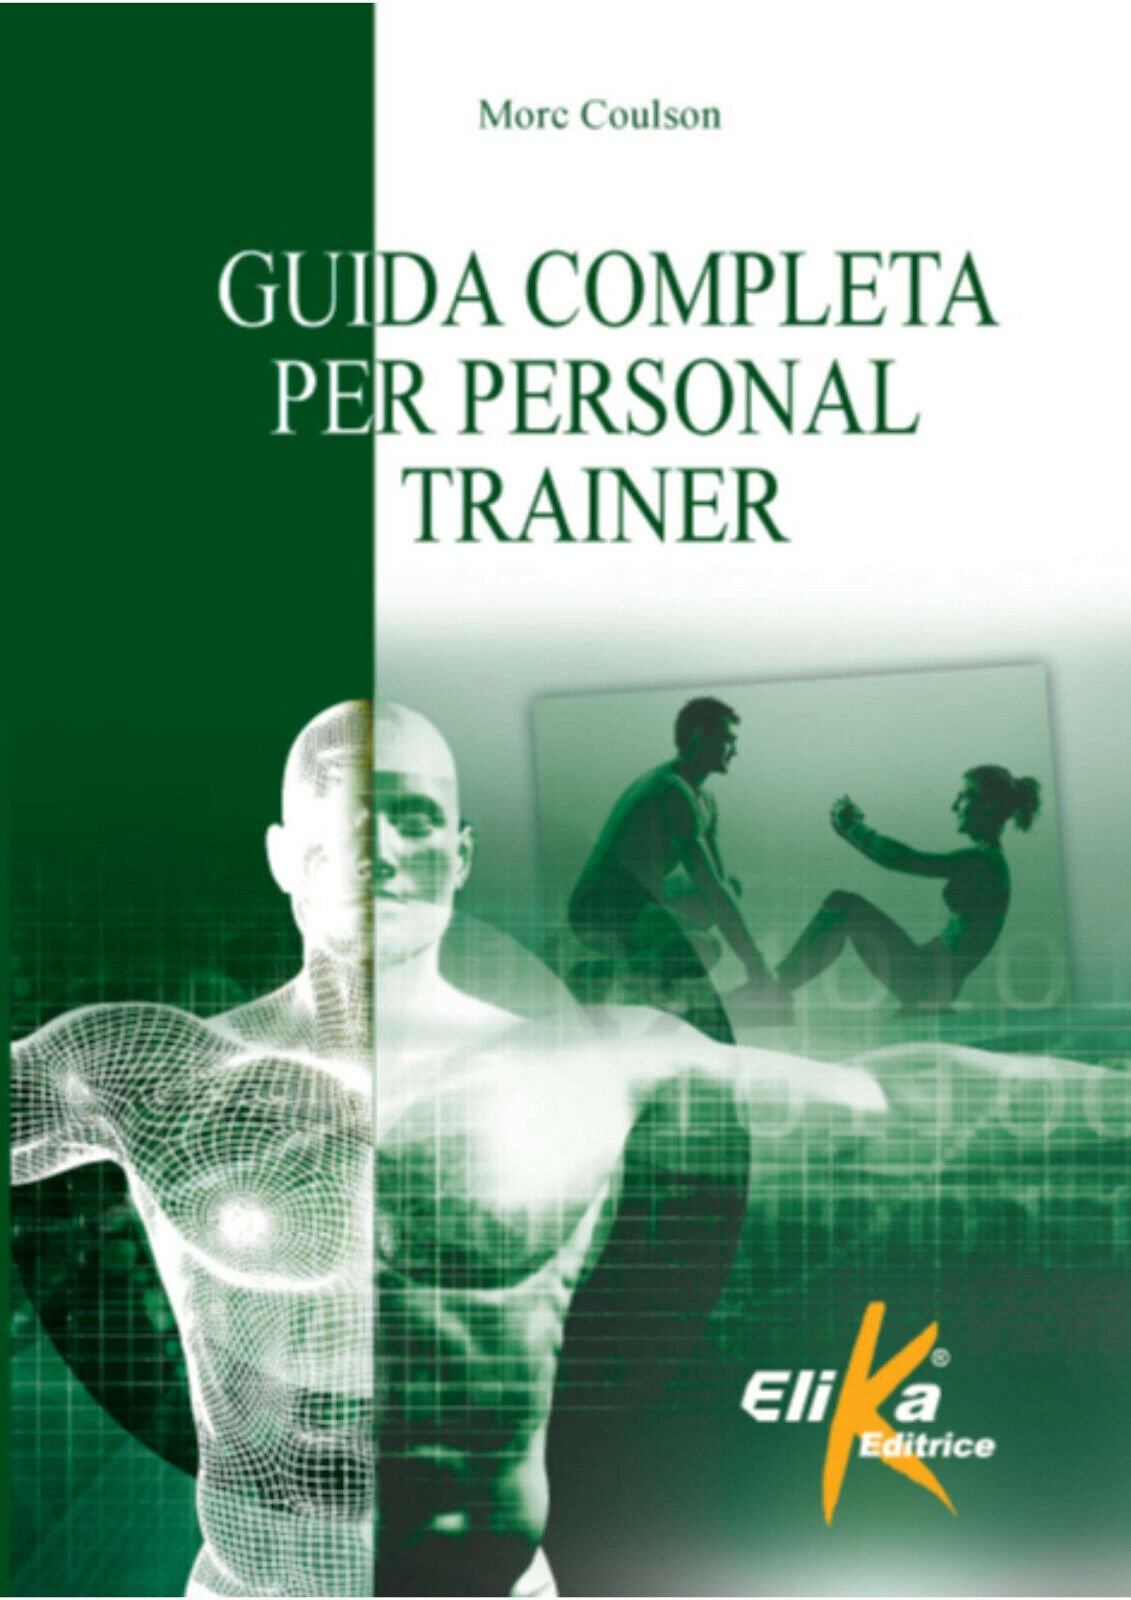 Guida completa per personal trainer - Morc Coulson - Elika, 2019